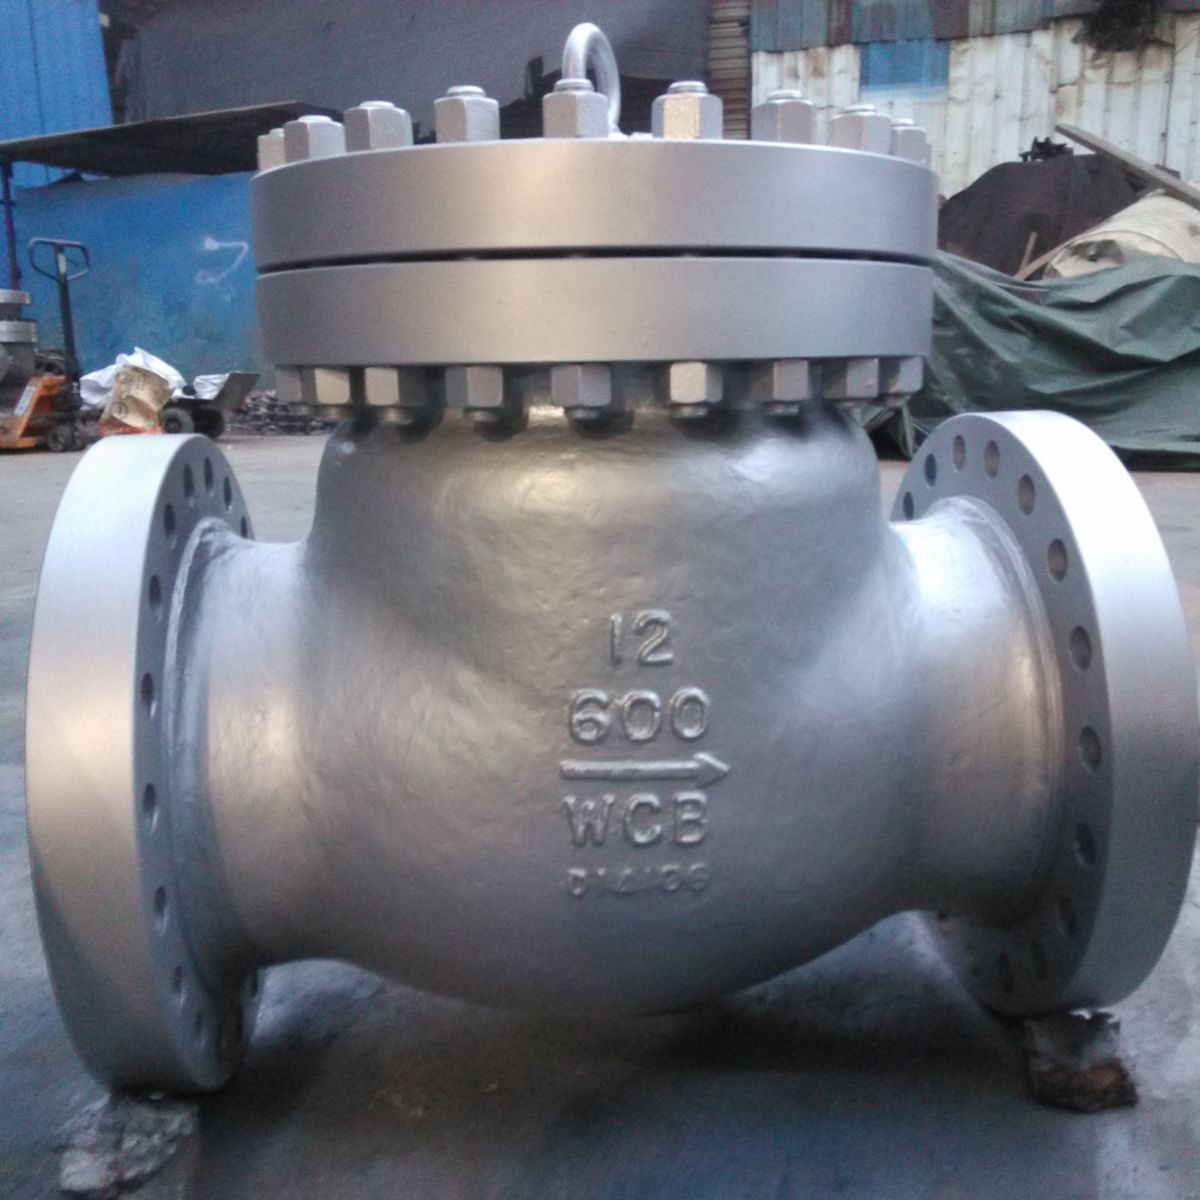 wcb high pressure check valve body